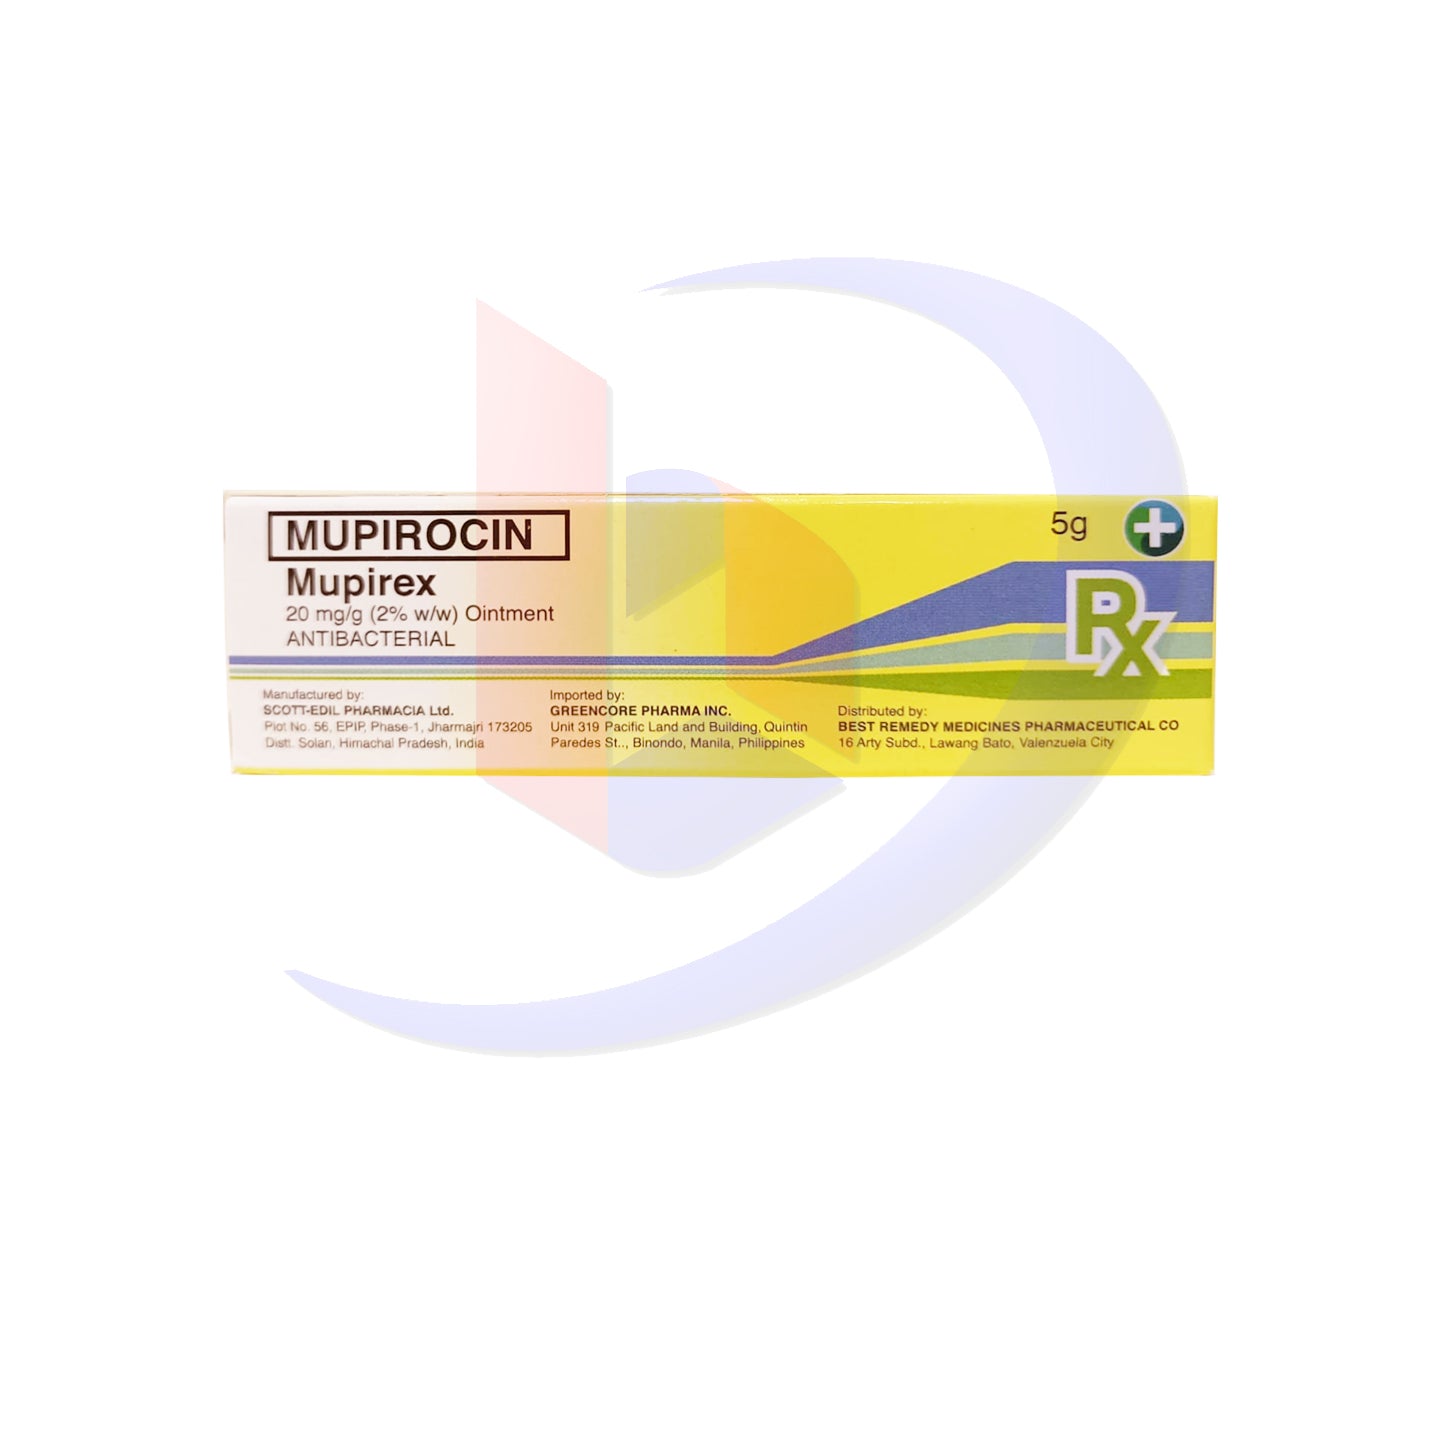 Mupirocin (Mupirex) 20mg/g (2@ w/w) Ointment 5g